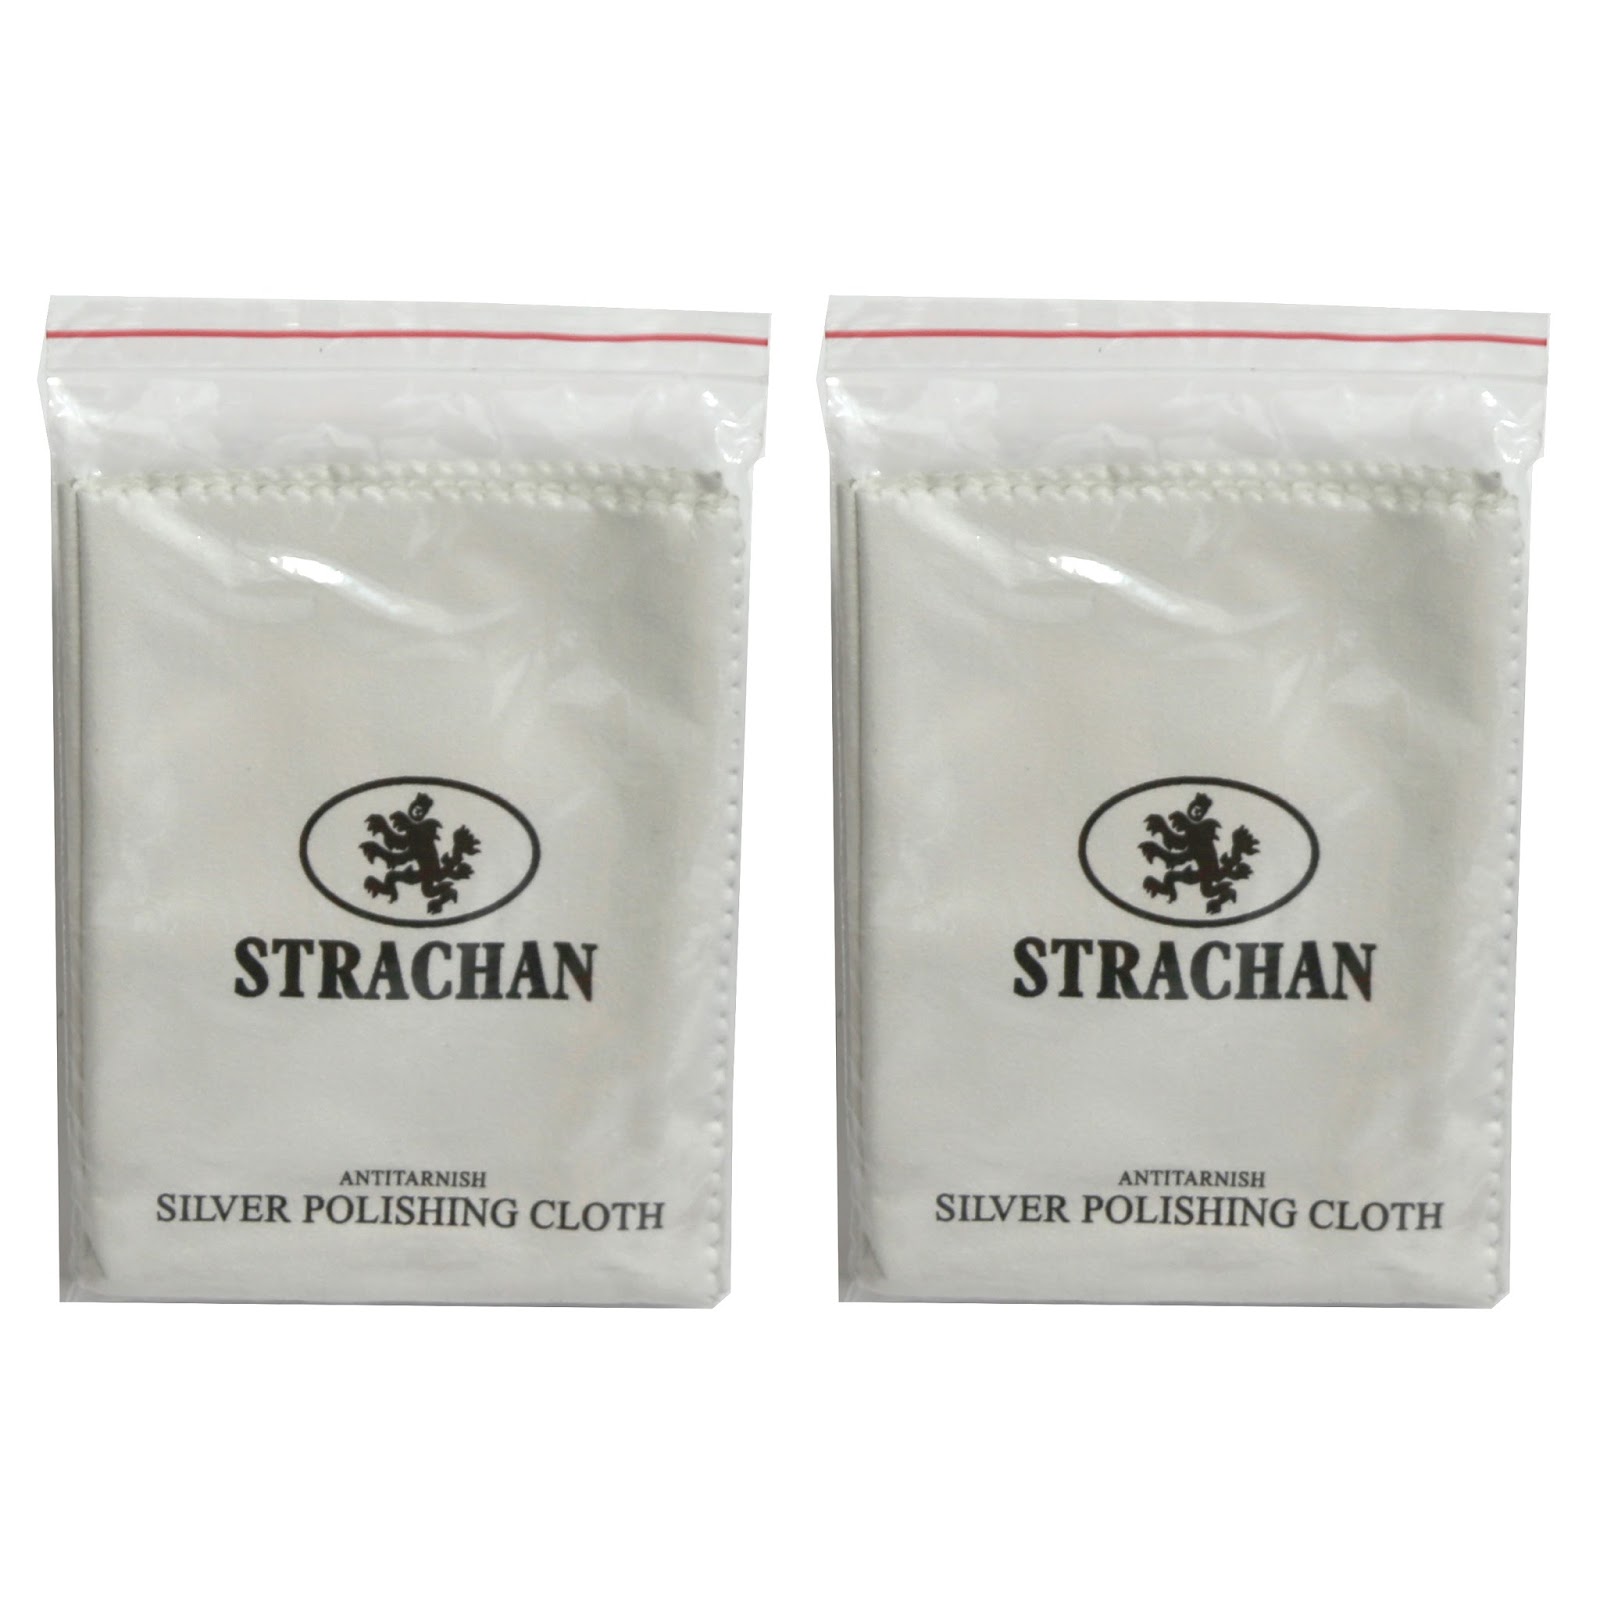 Survive the Elements: STRACHAN Anti-Tarnish Silver Polishing Cloth